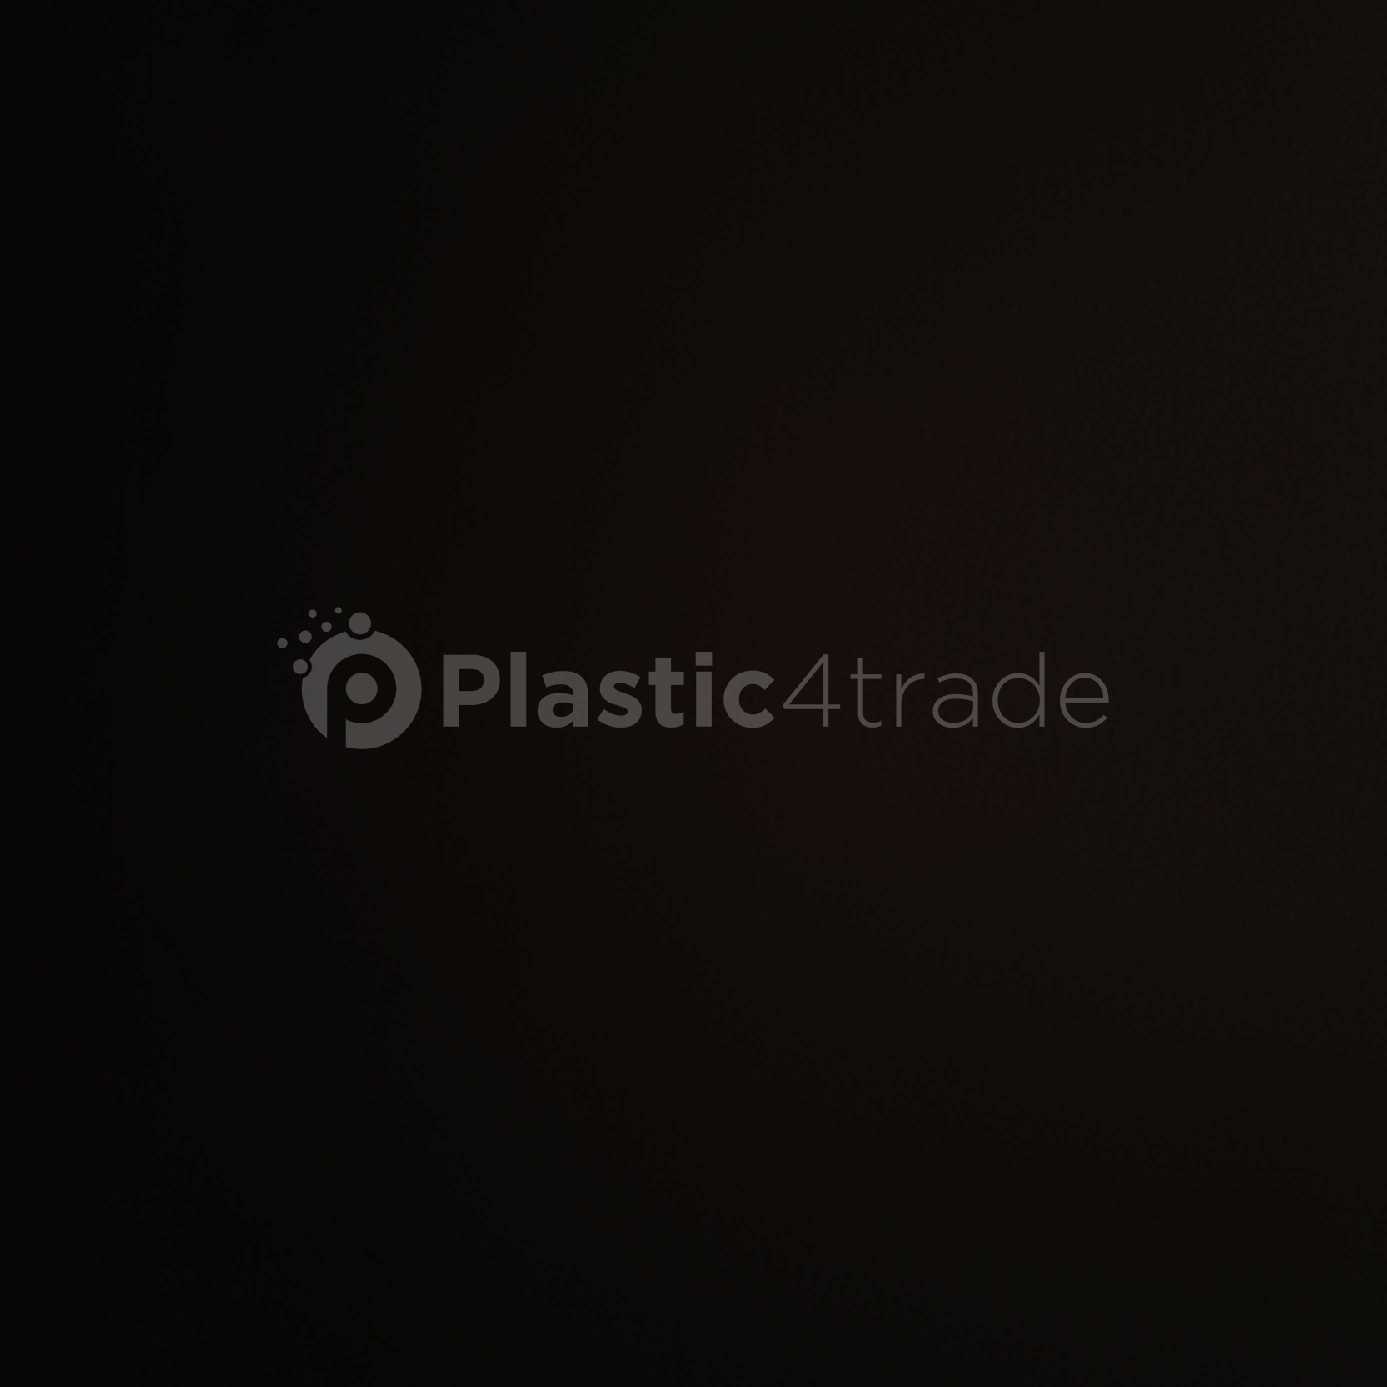 BLACK PP DANA PP Reprocess Granule Injection Molding maharashtra india Plastic4trade